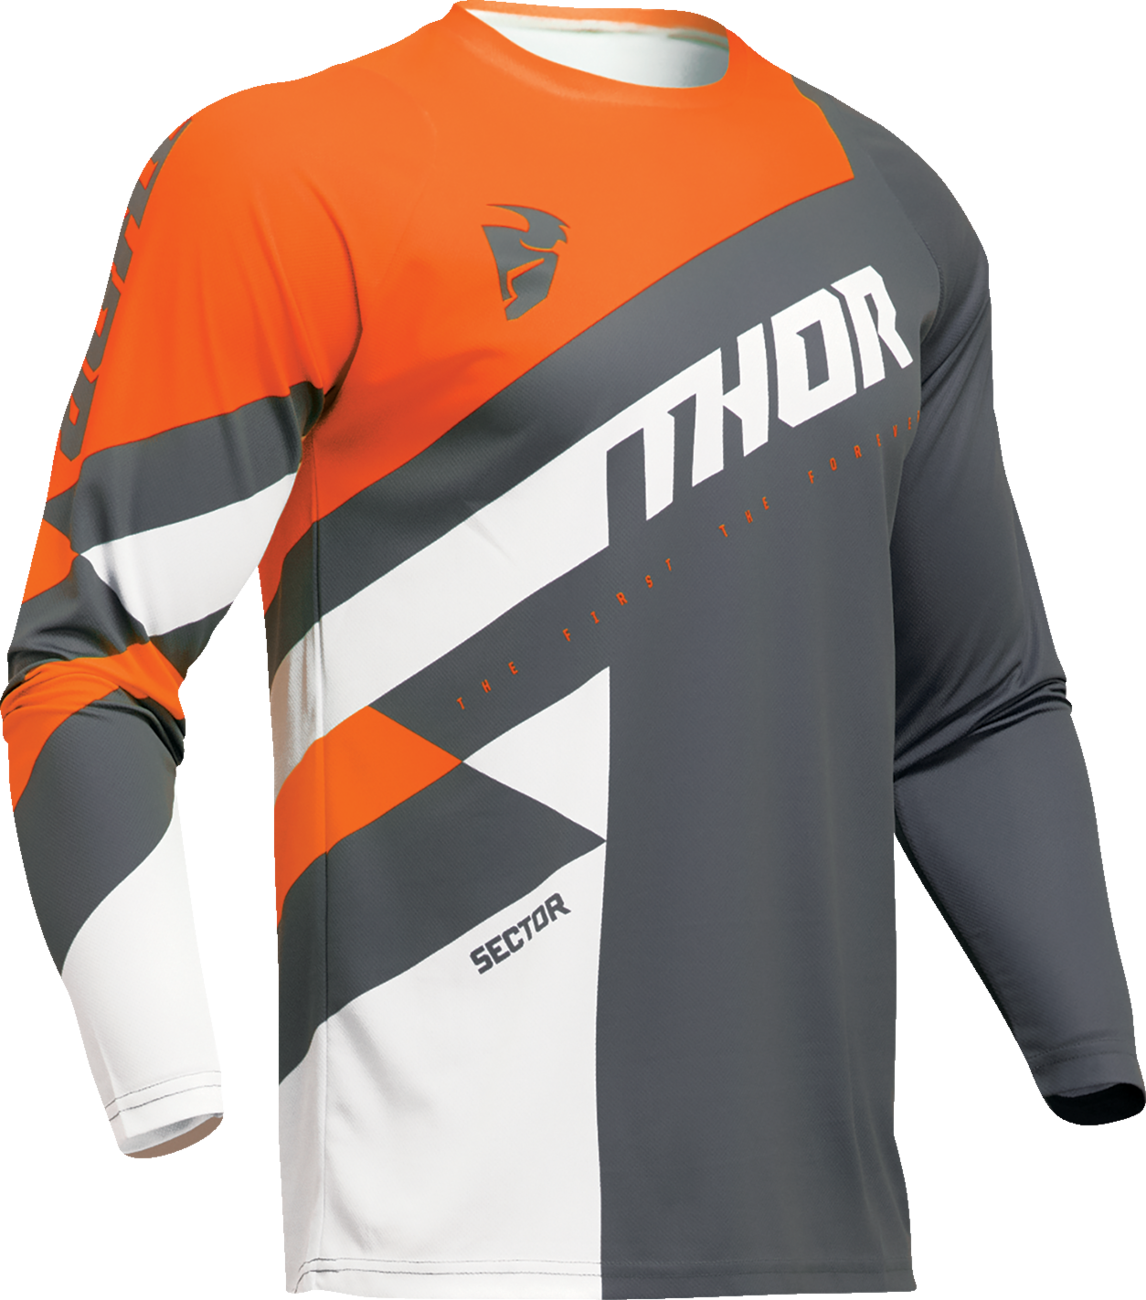 Thor Sector Chkr Kit Adult Orange / Grey